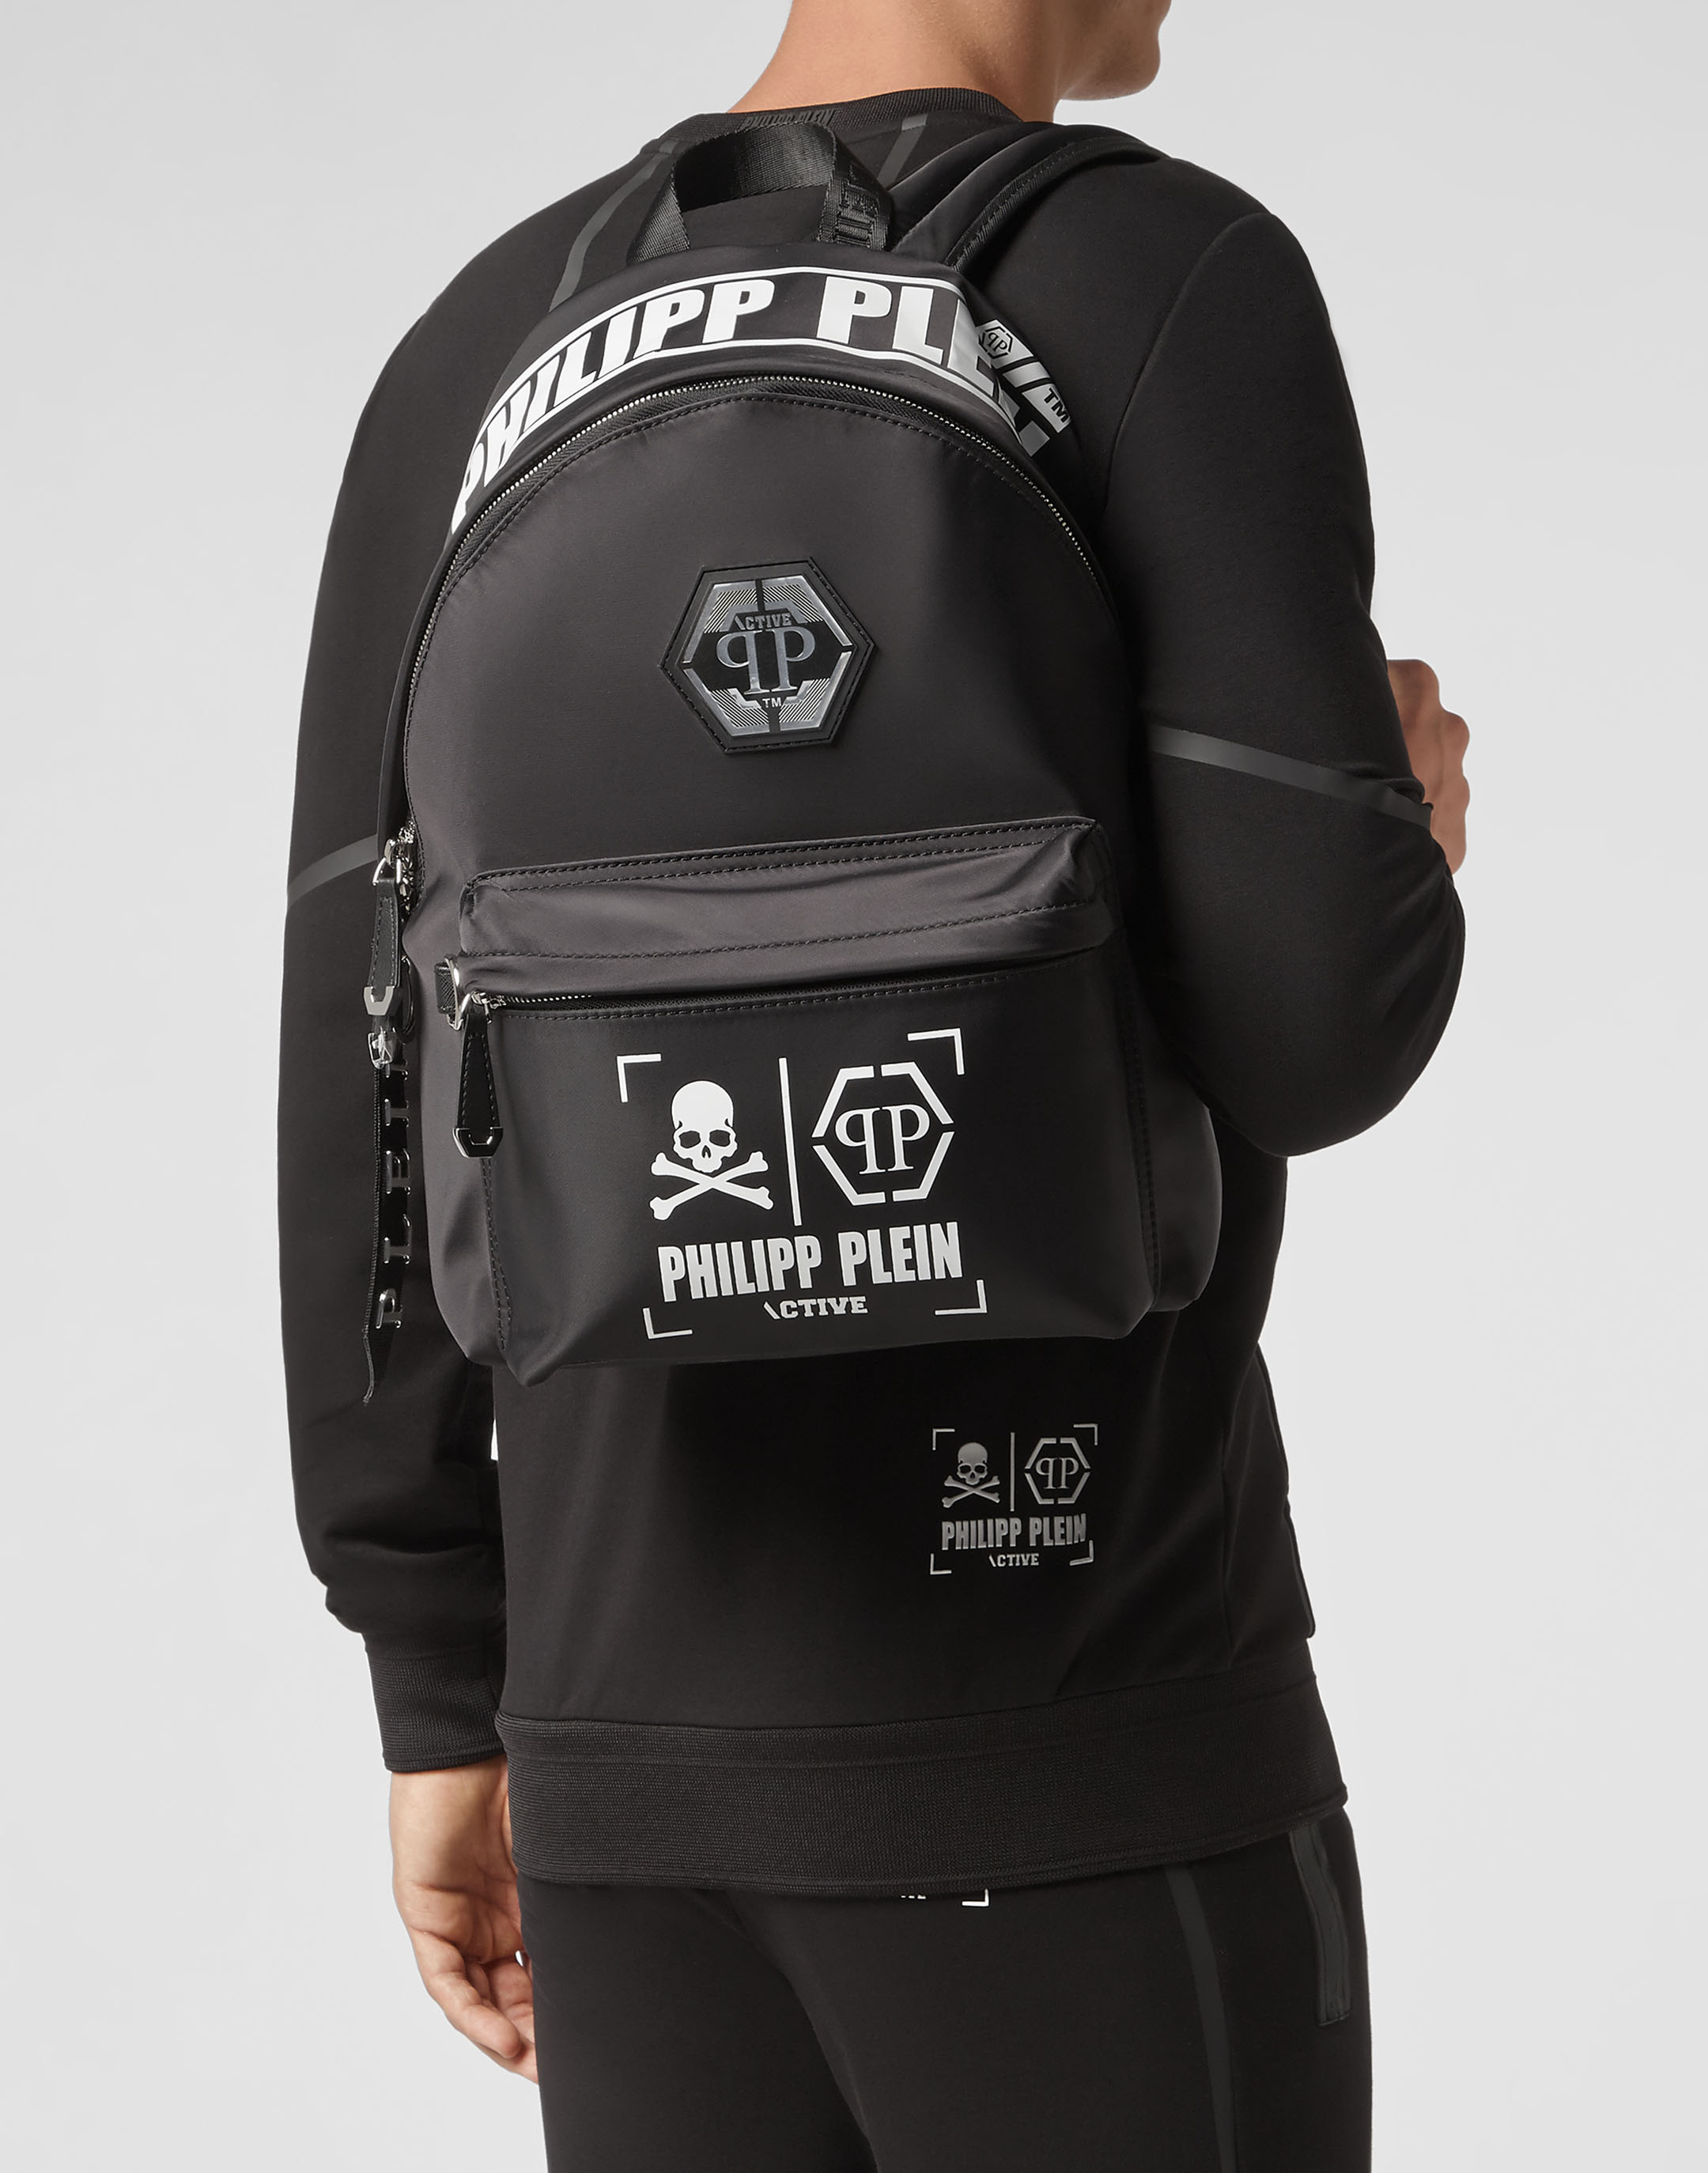 Backpack Original | Philipp Plein Outlet